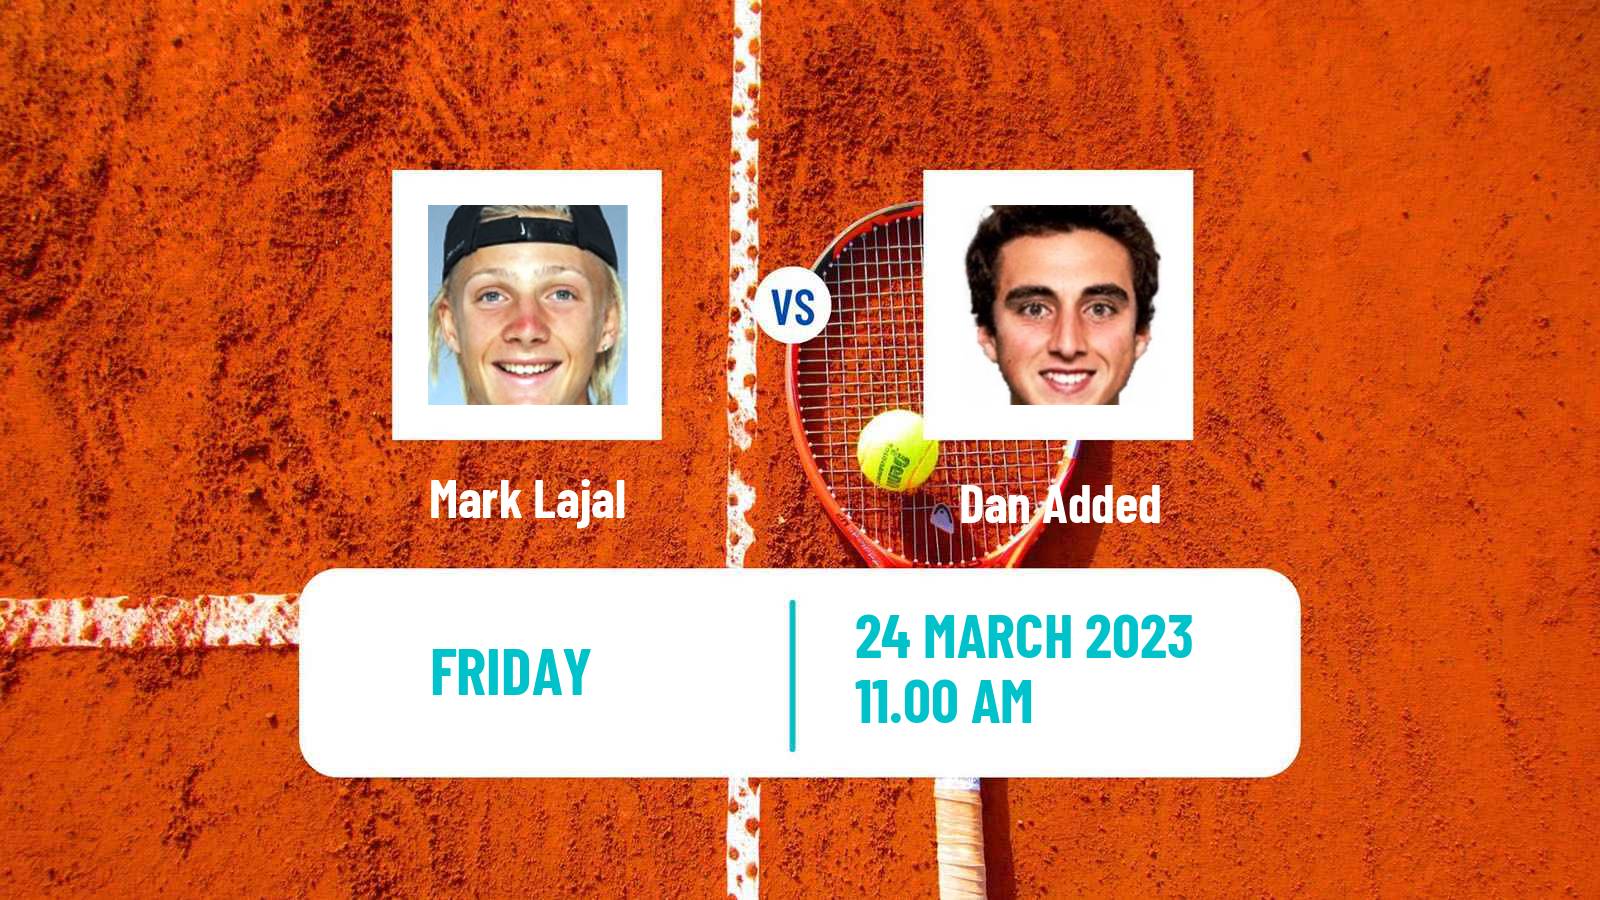 Tennis ATP Challenger Mark Lajal - Dan Added